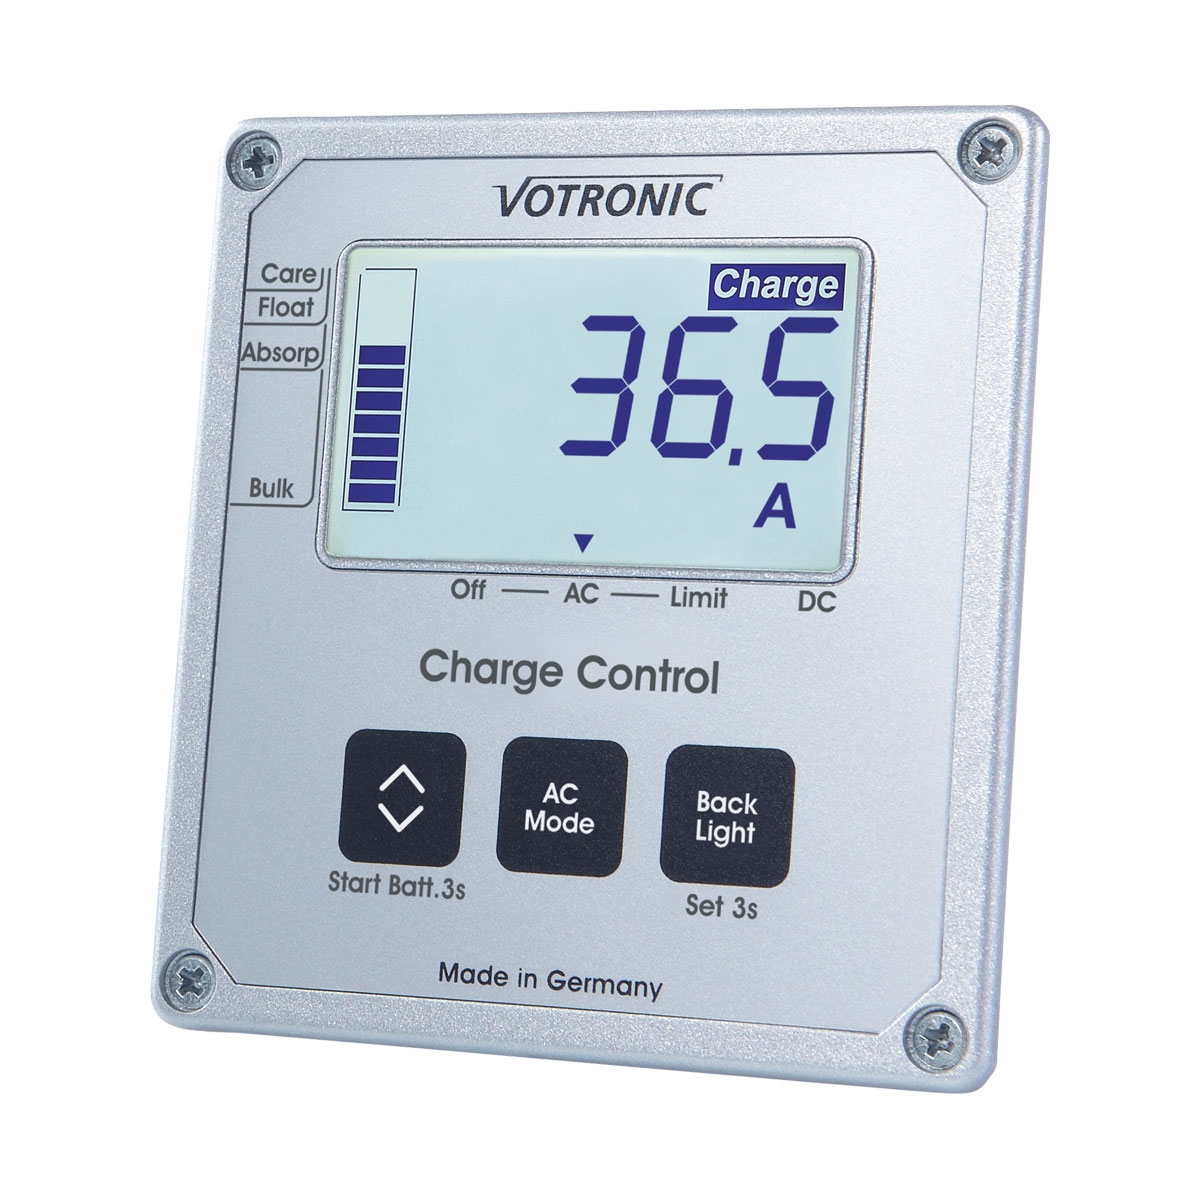 VOTRONIC LCD-Charge Control S fuer VBCS Triple  - 1247